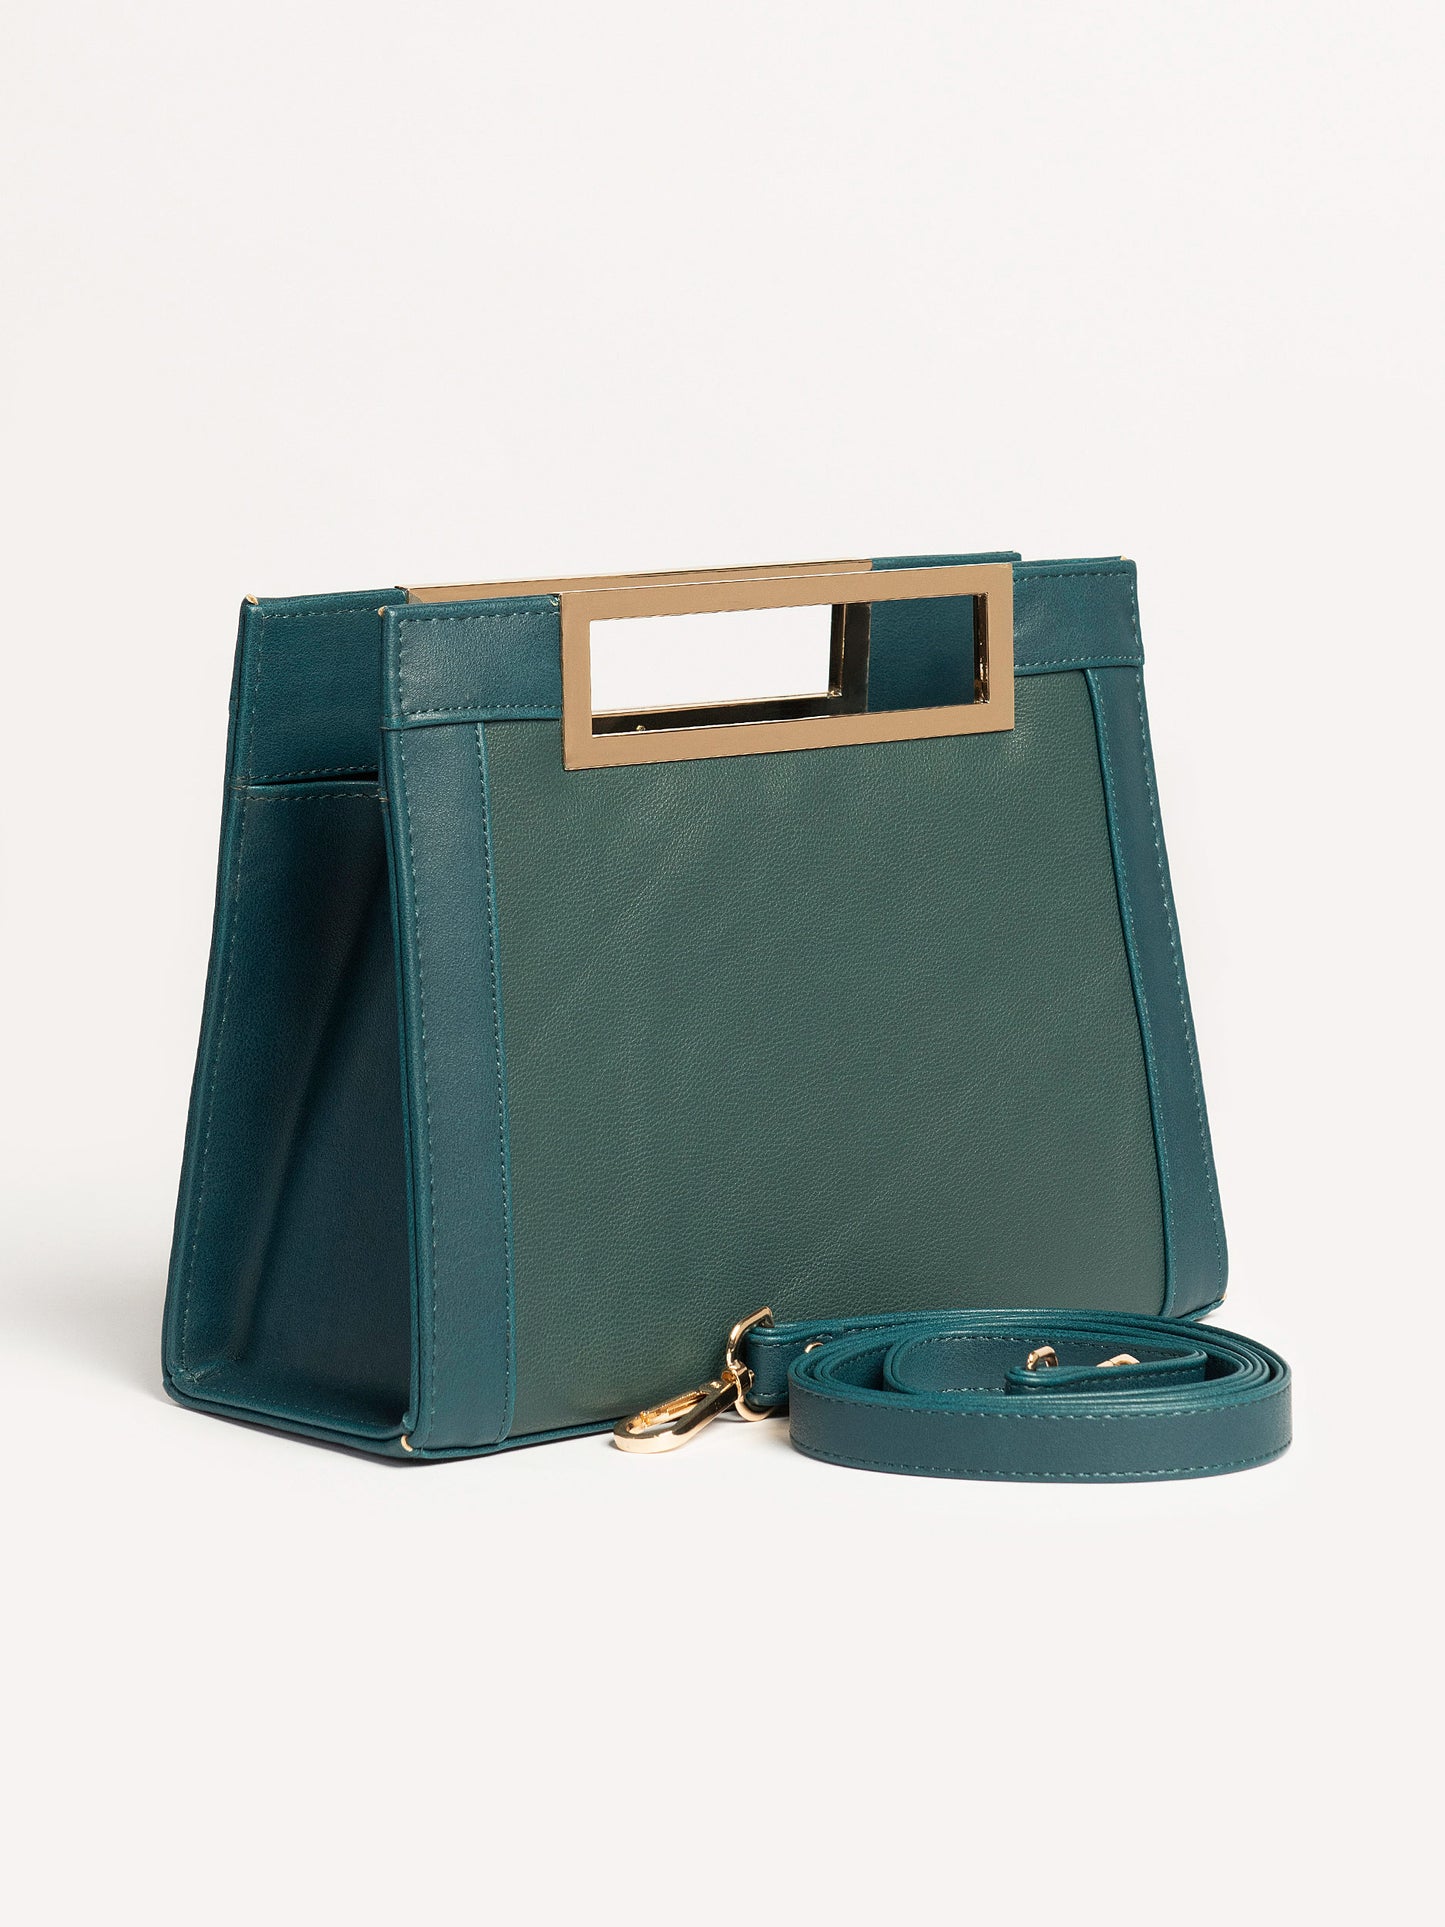 Box Styled Metallic Handbag